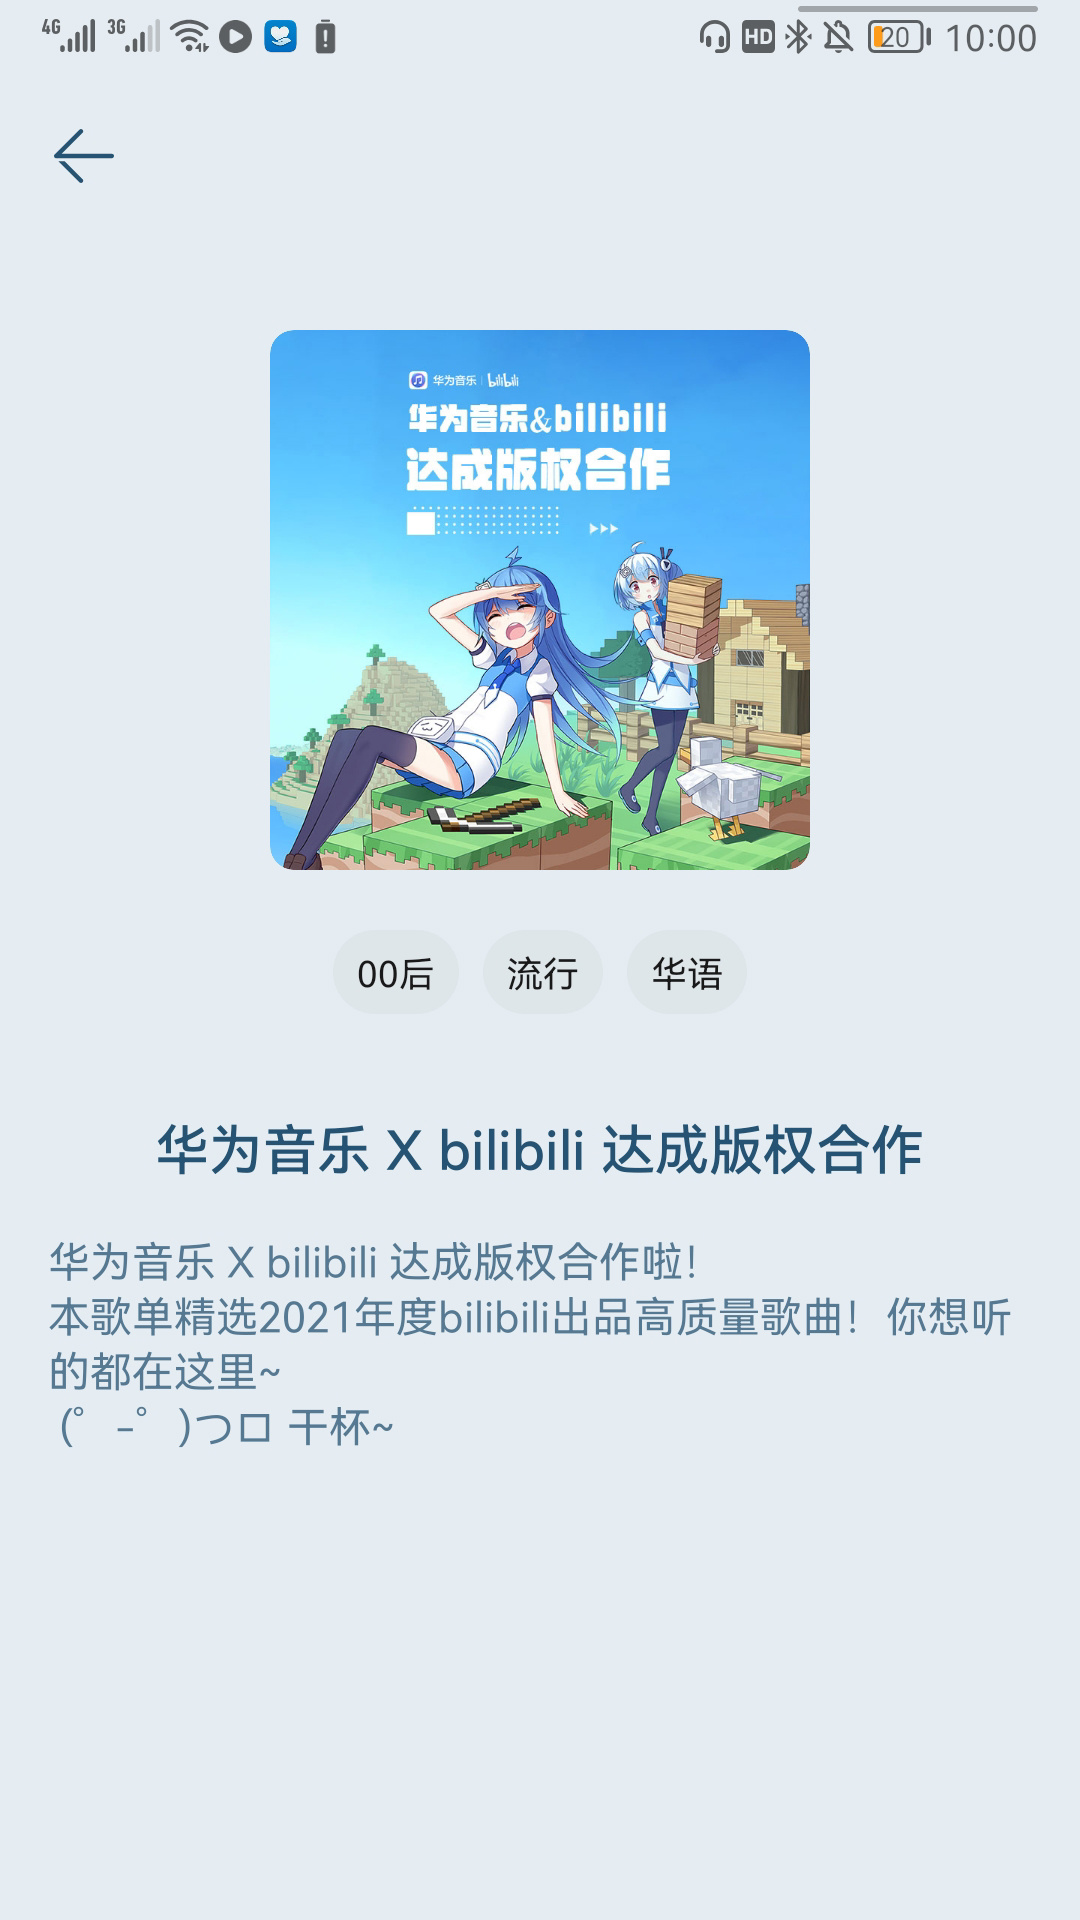 Huawei Music and bilibili-2